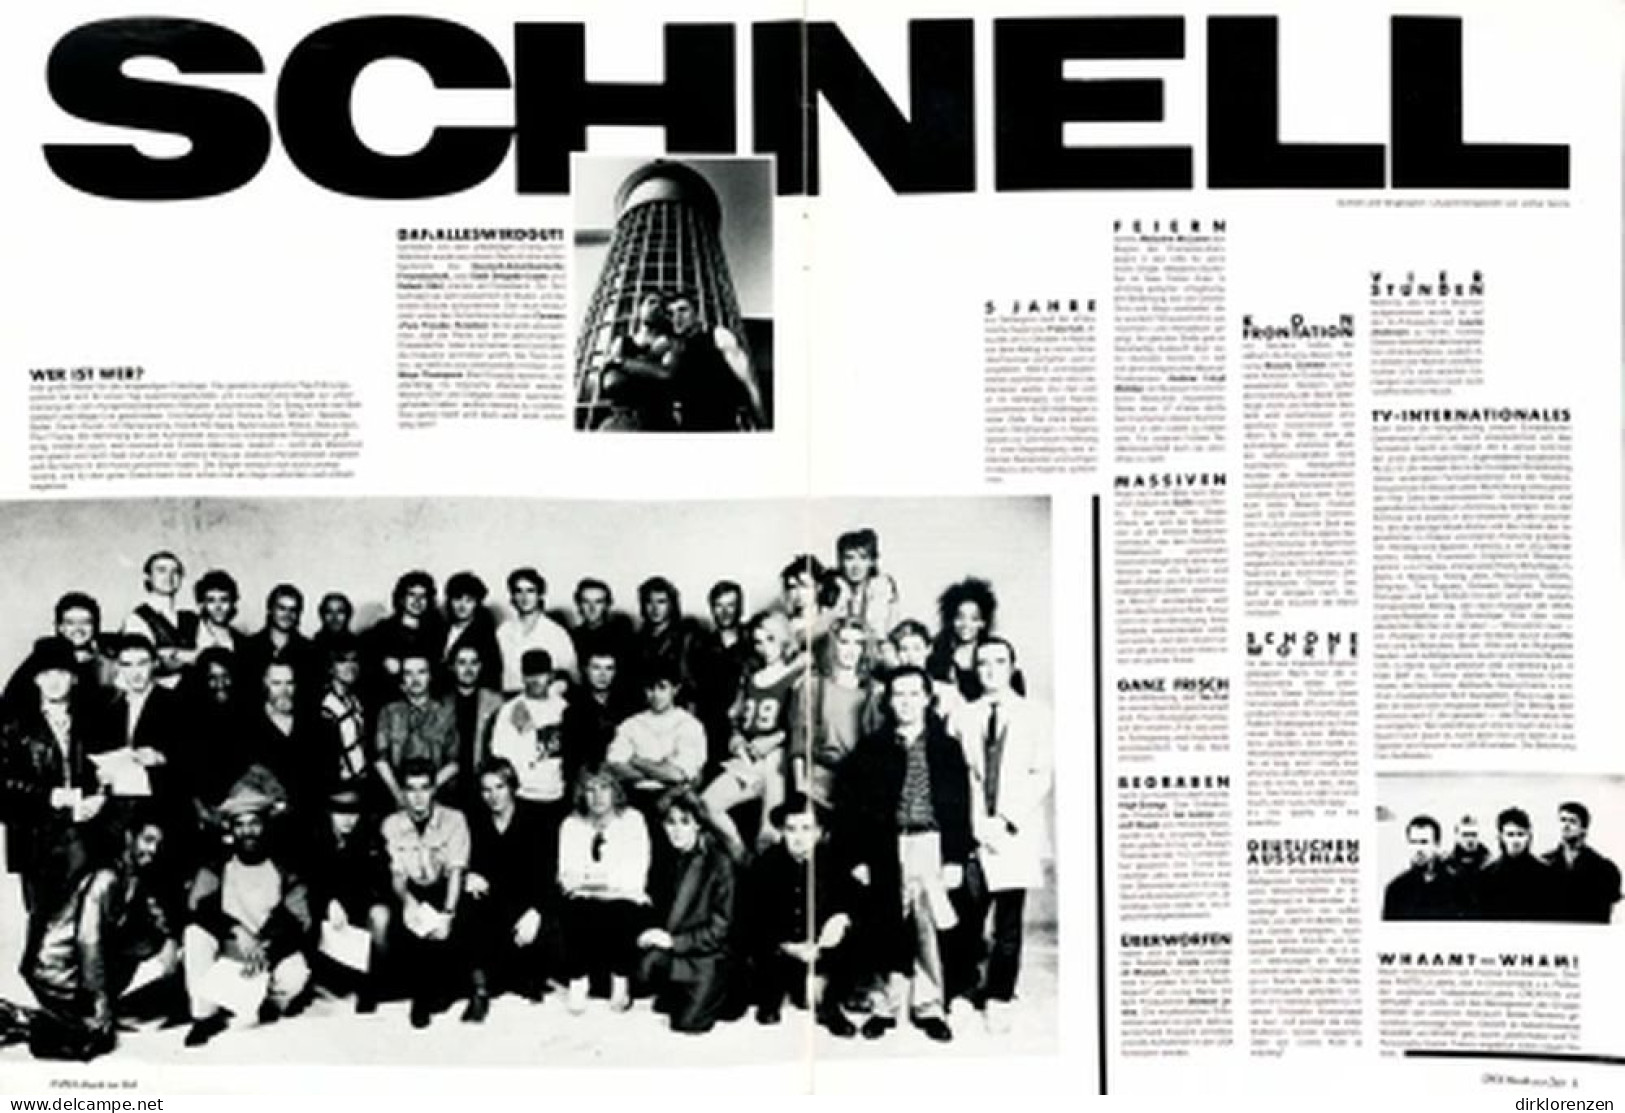 Spex Magazine Germany 1985-01 Culture Club Redskins Stranglers - Unclassified